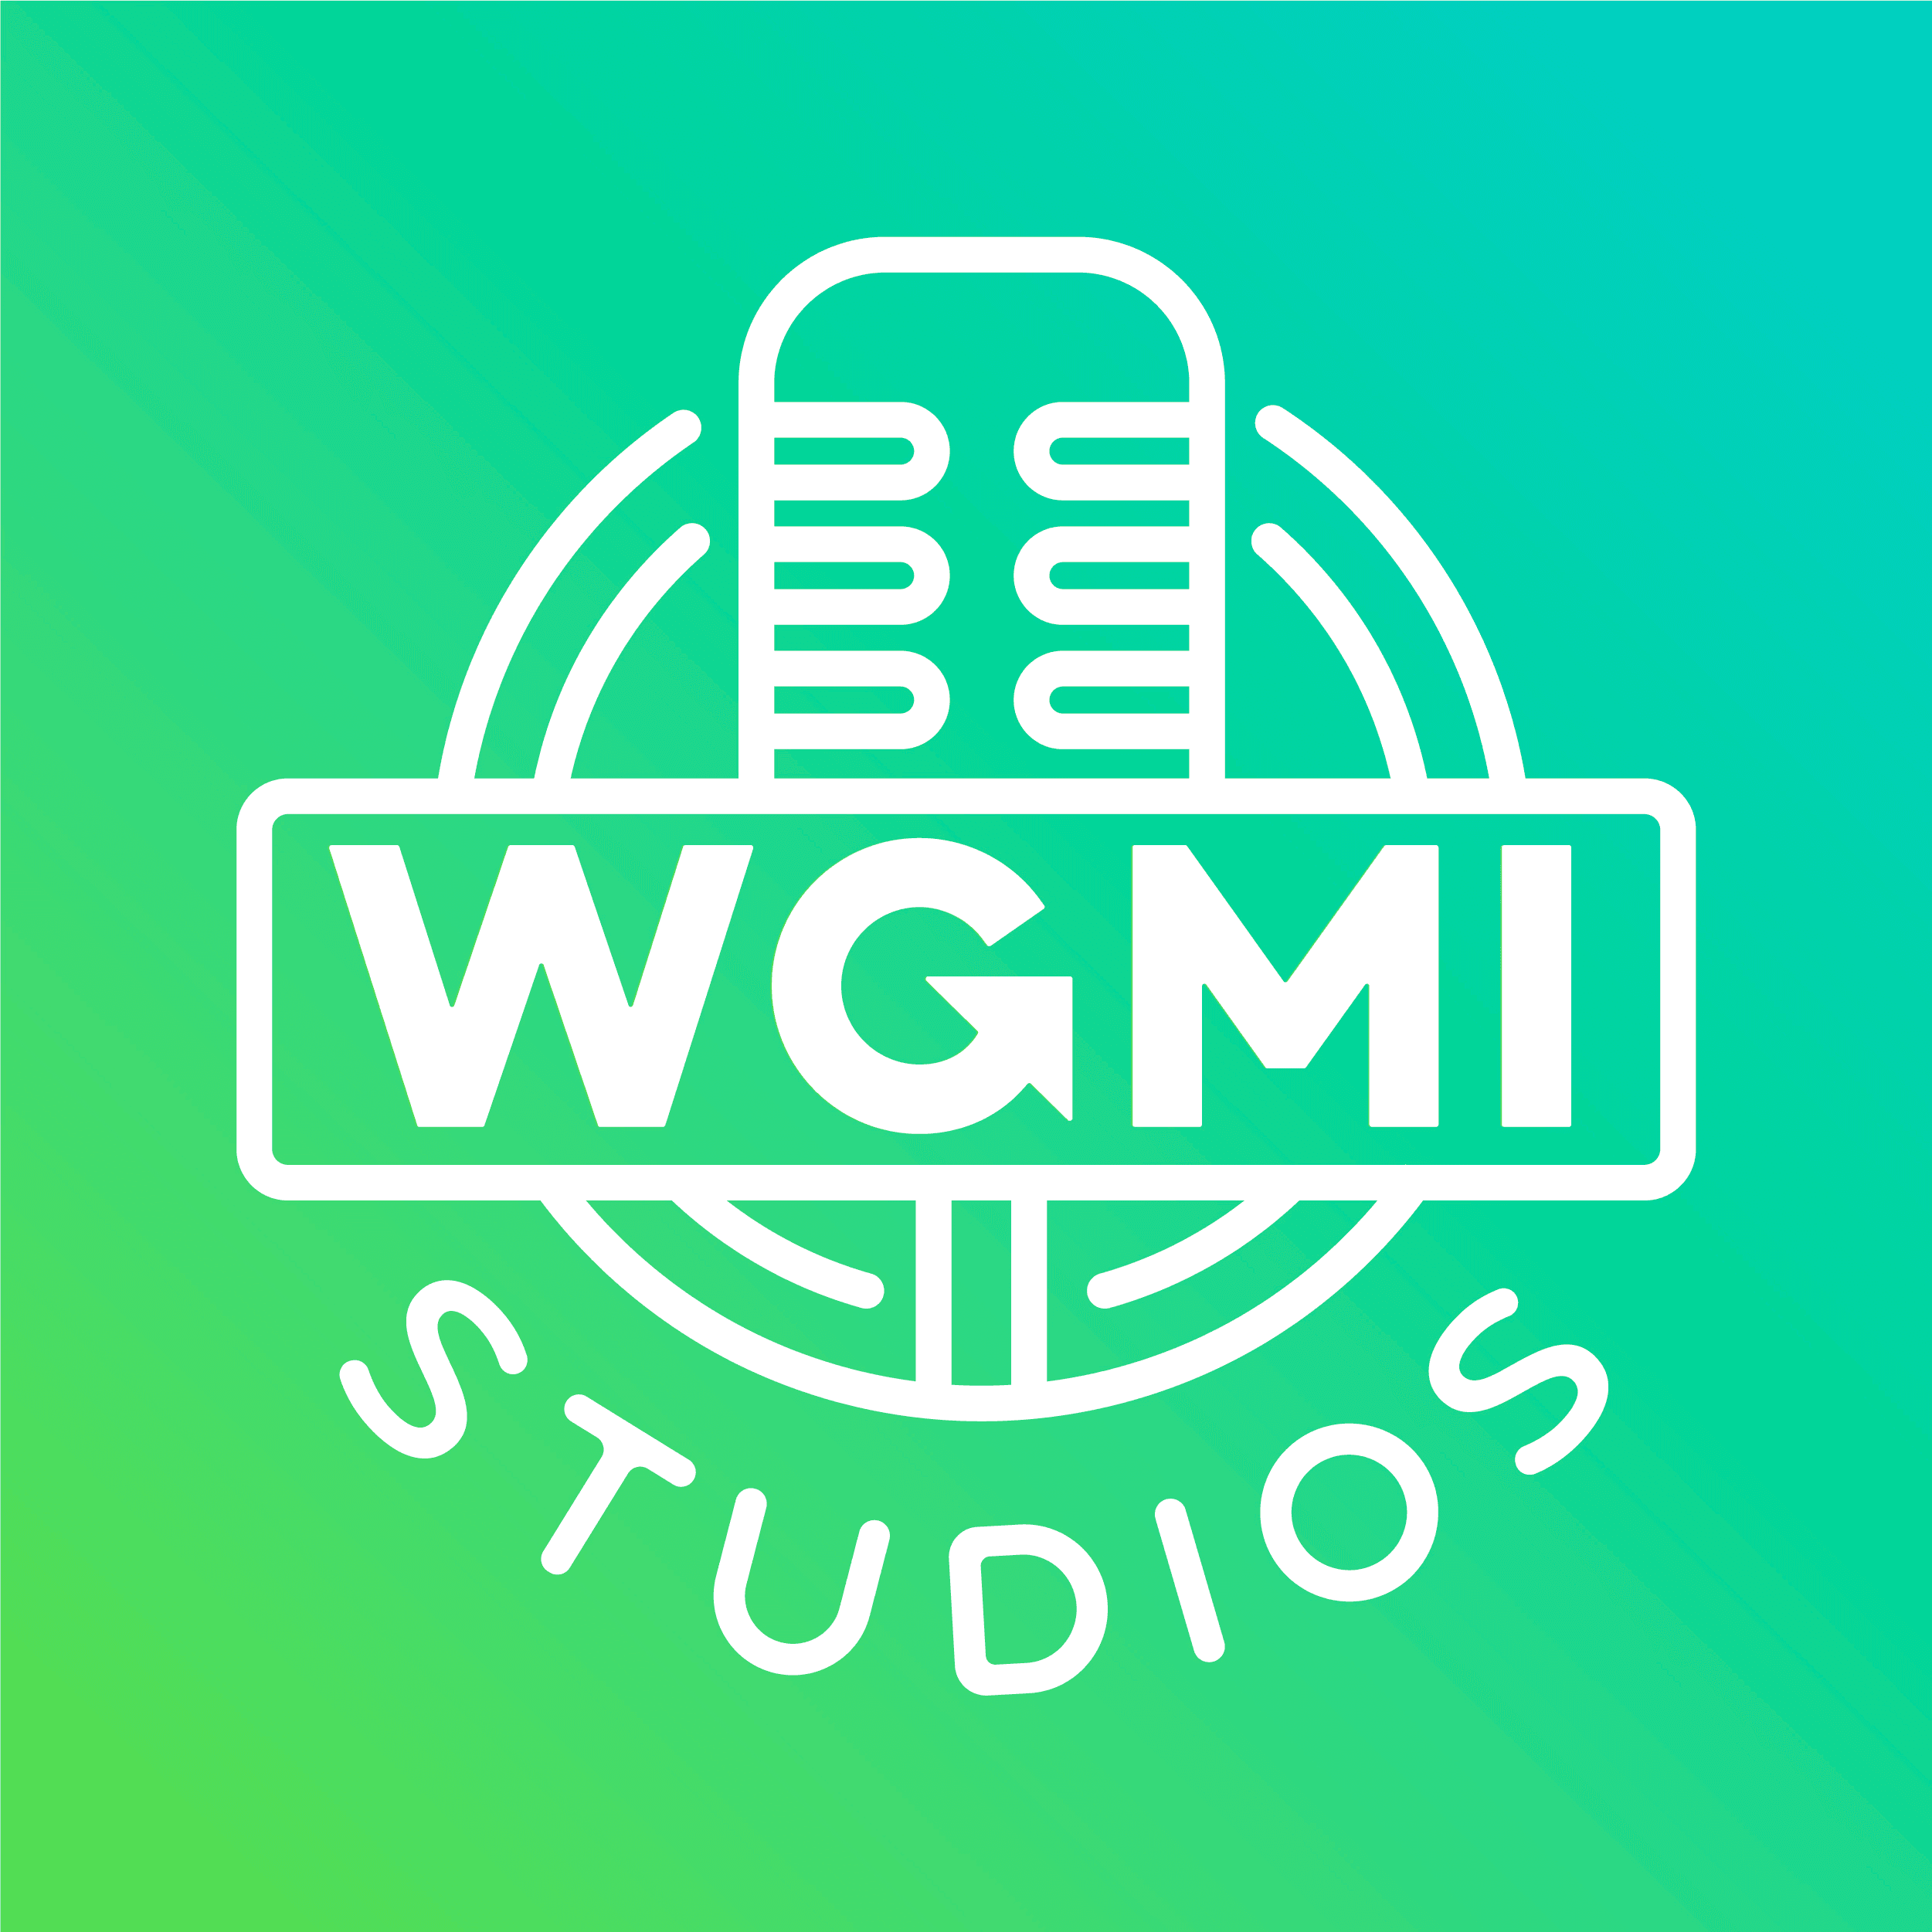 WGMI Studios #949